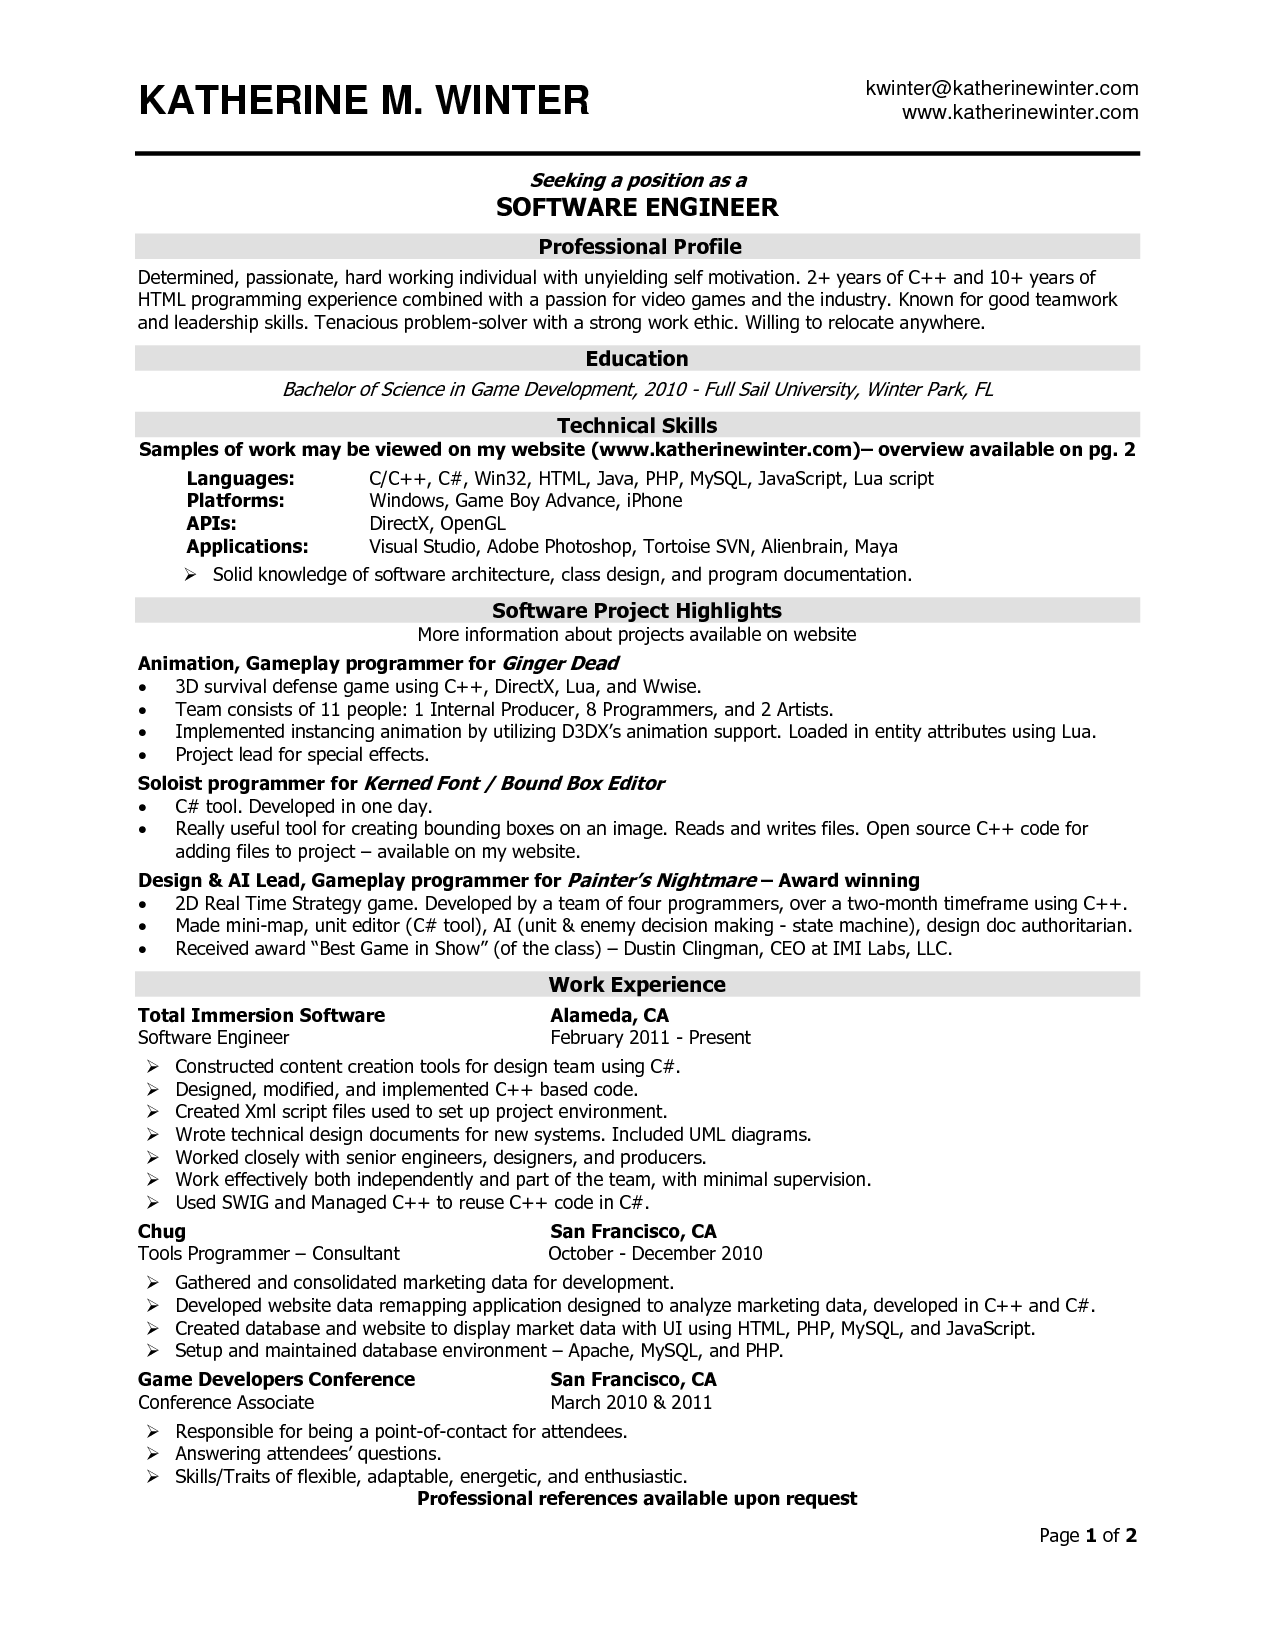 resume format for software developer experienced nursing job 